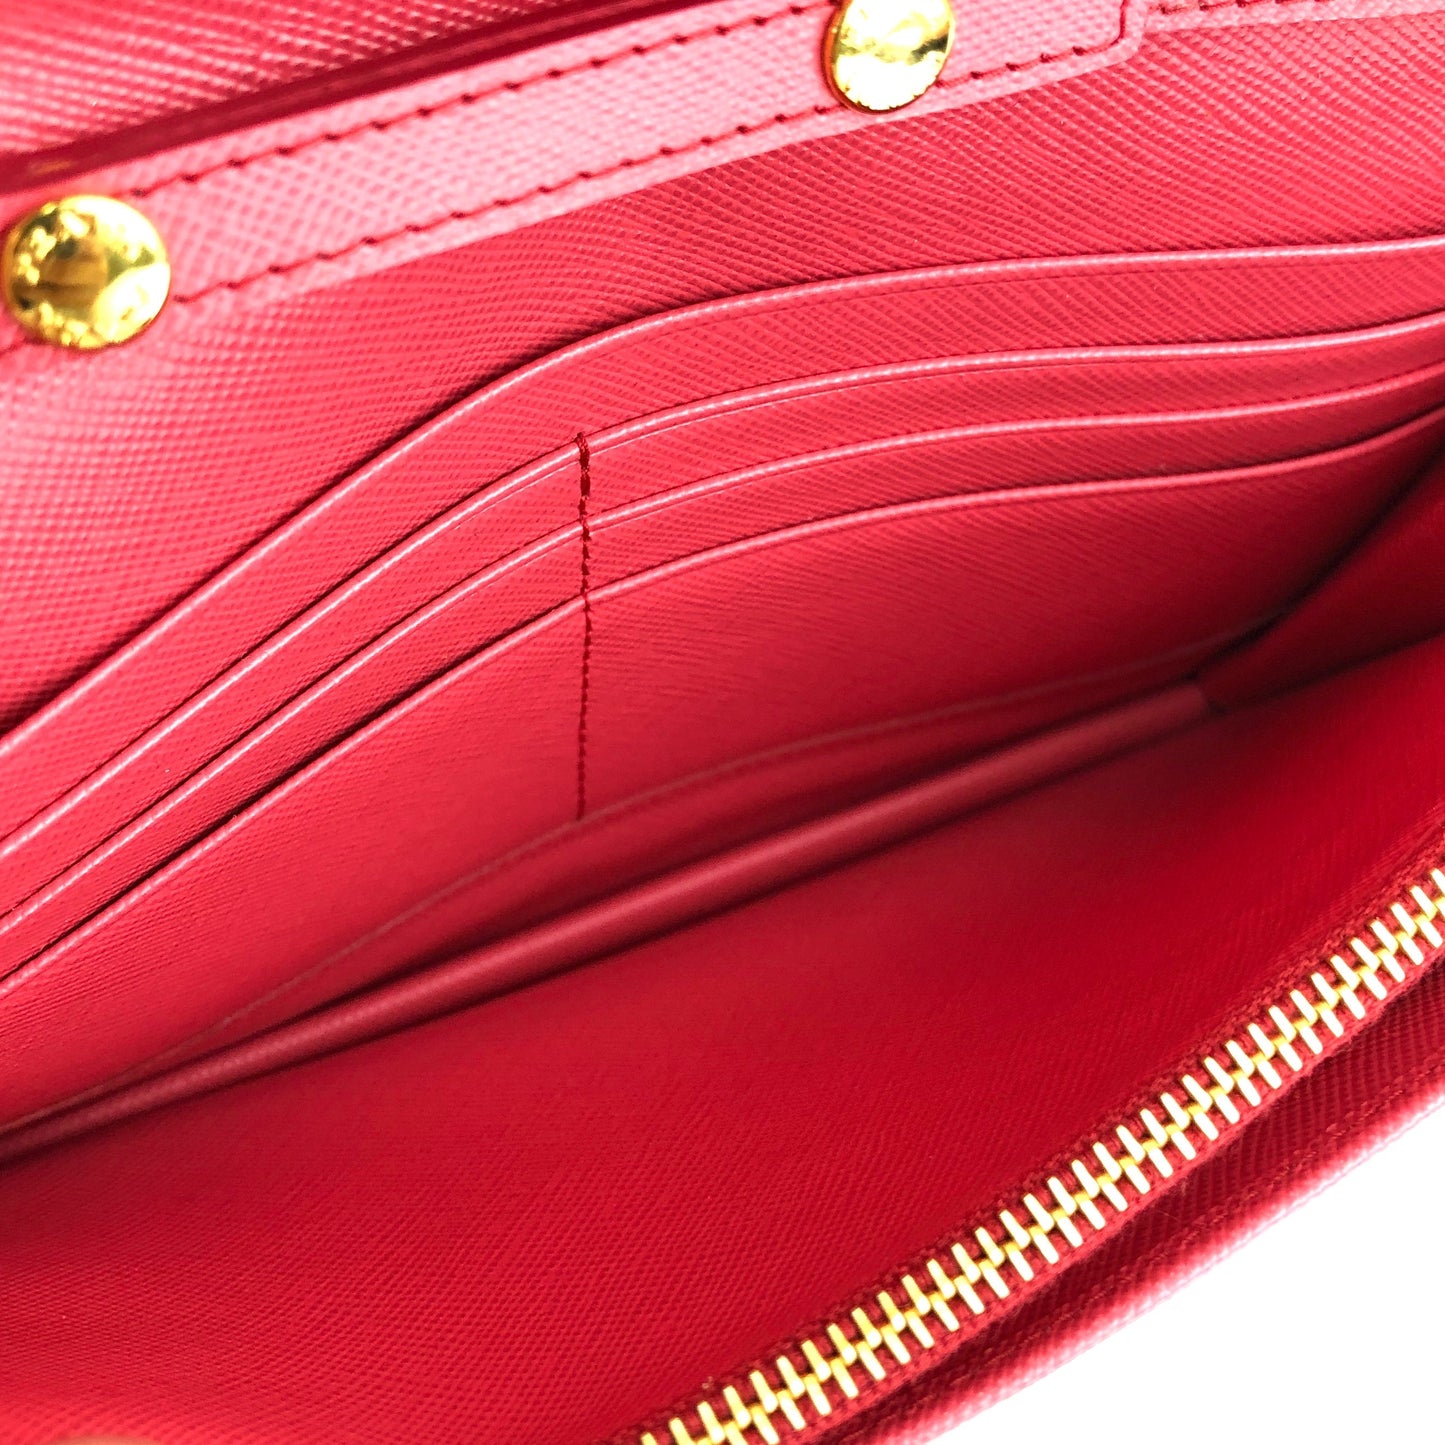 PRADA Logo Saffiano leather Chain Wallet Shoulderbag 1M1405 Pink Vintage Old jz8uth